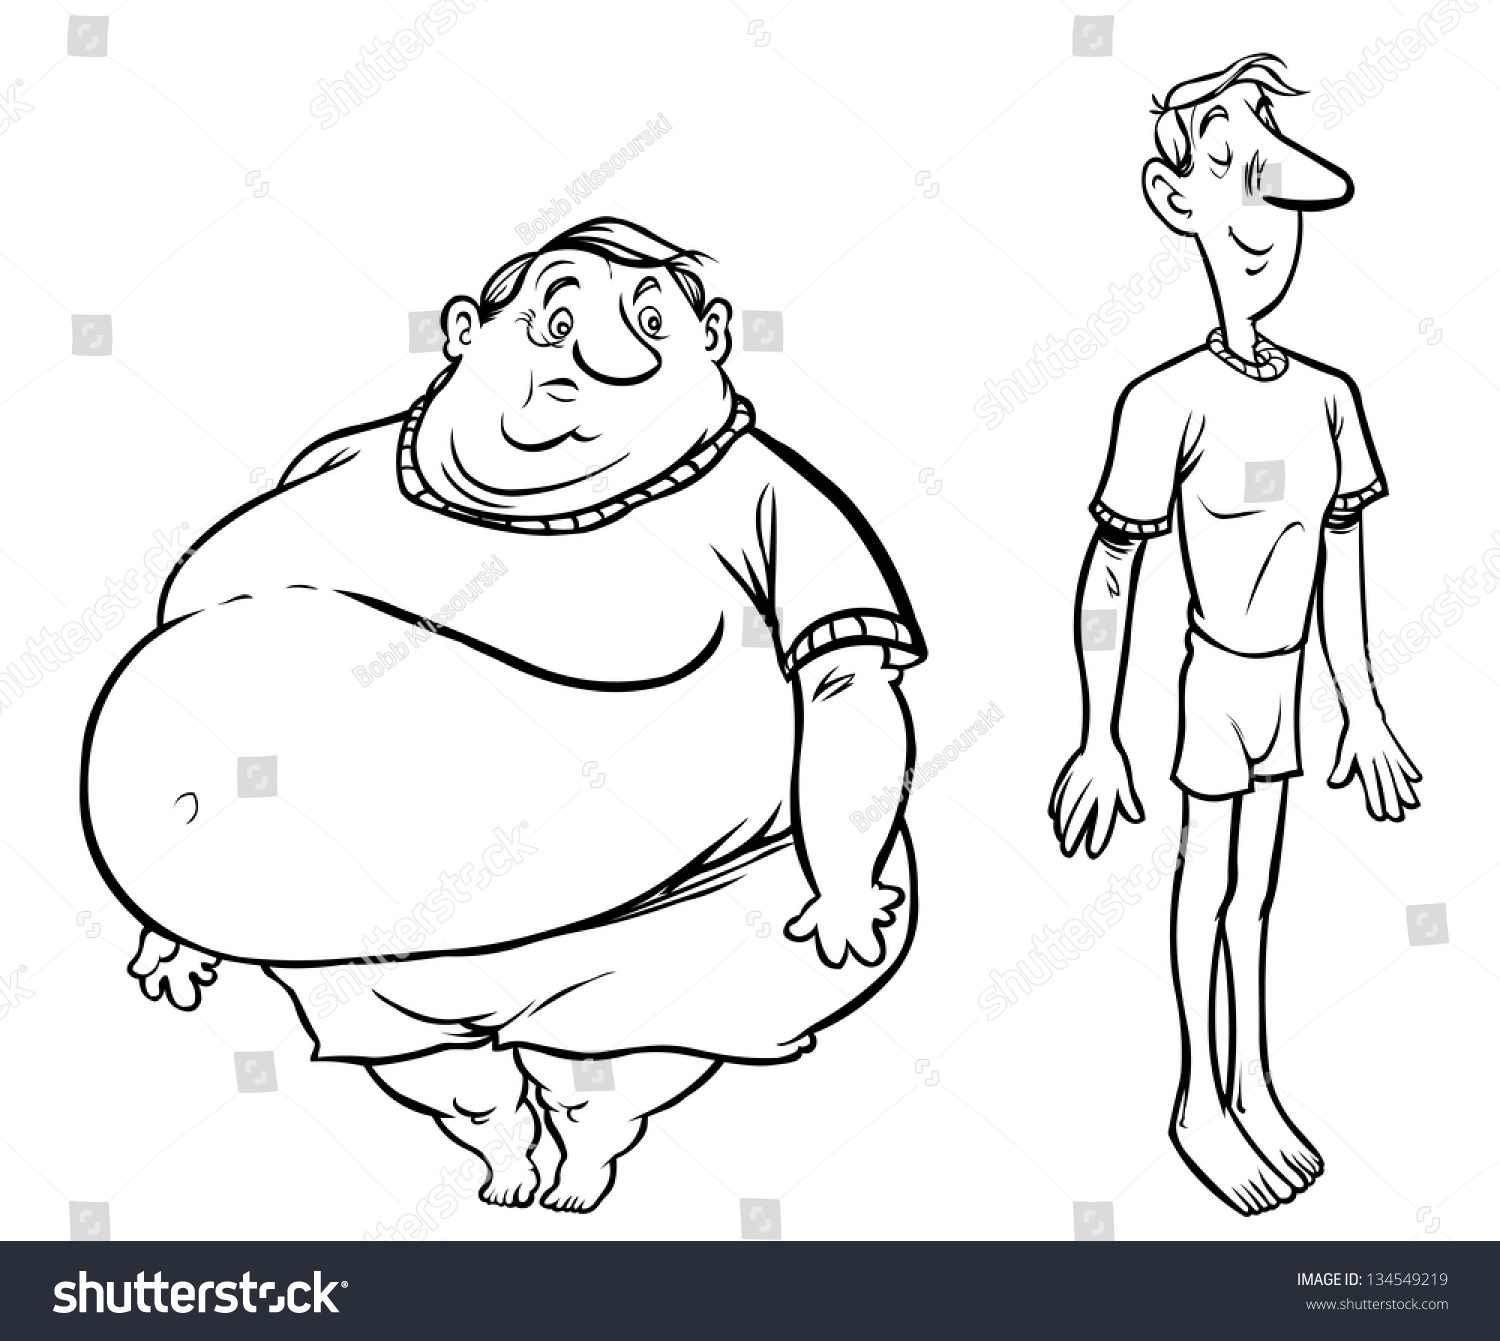 Карикатуры на толстых мужчин